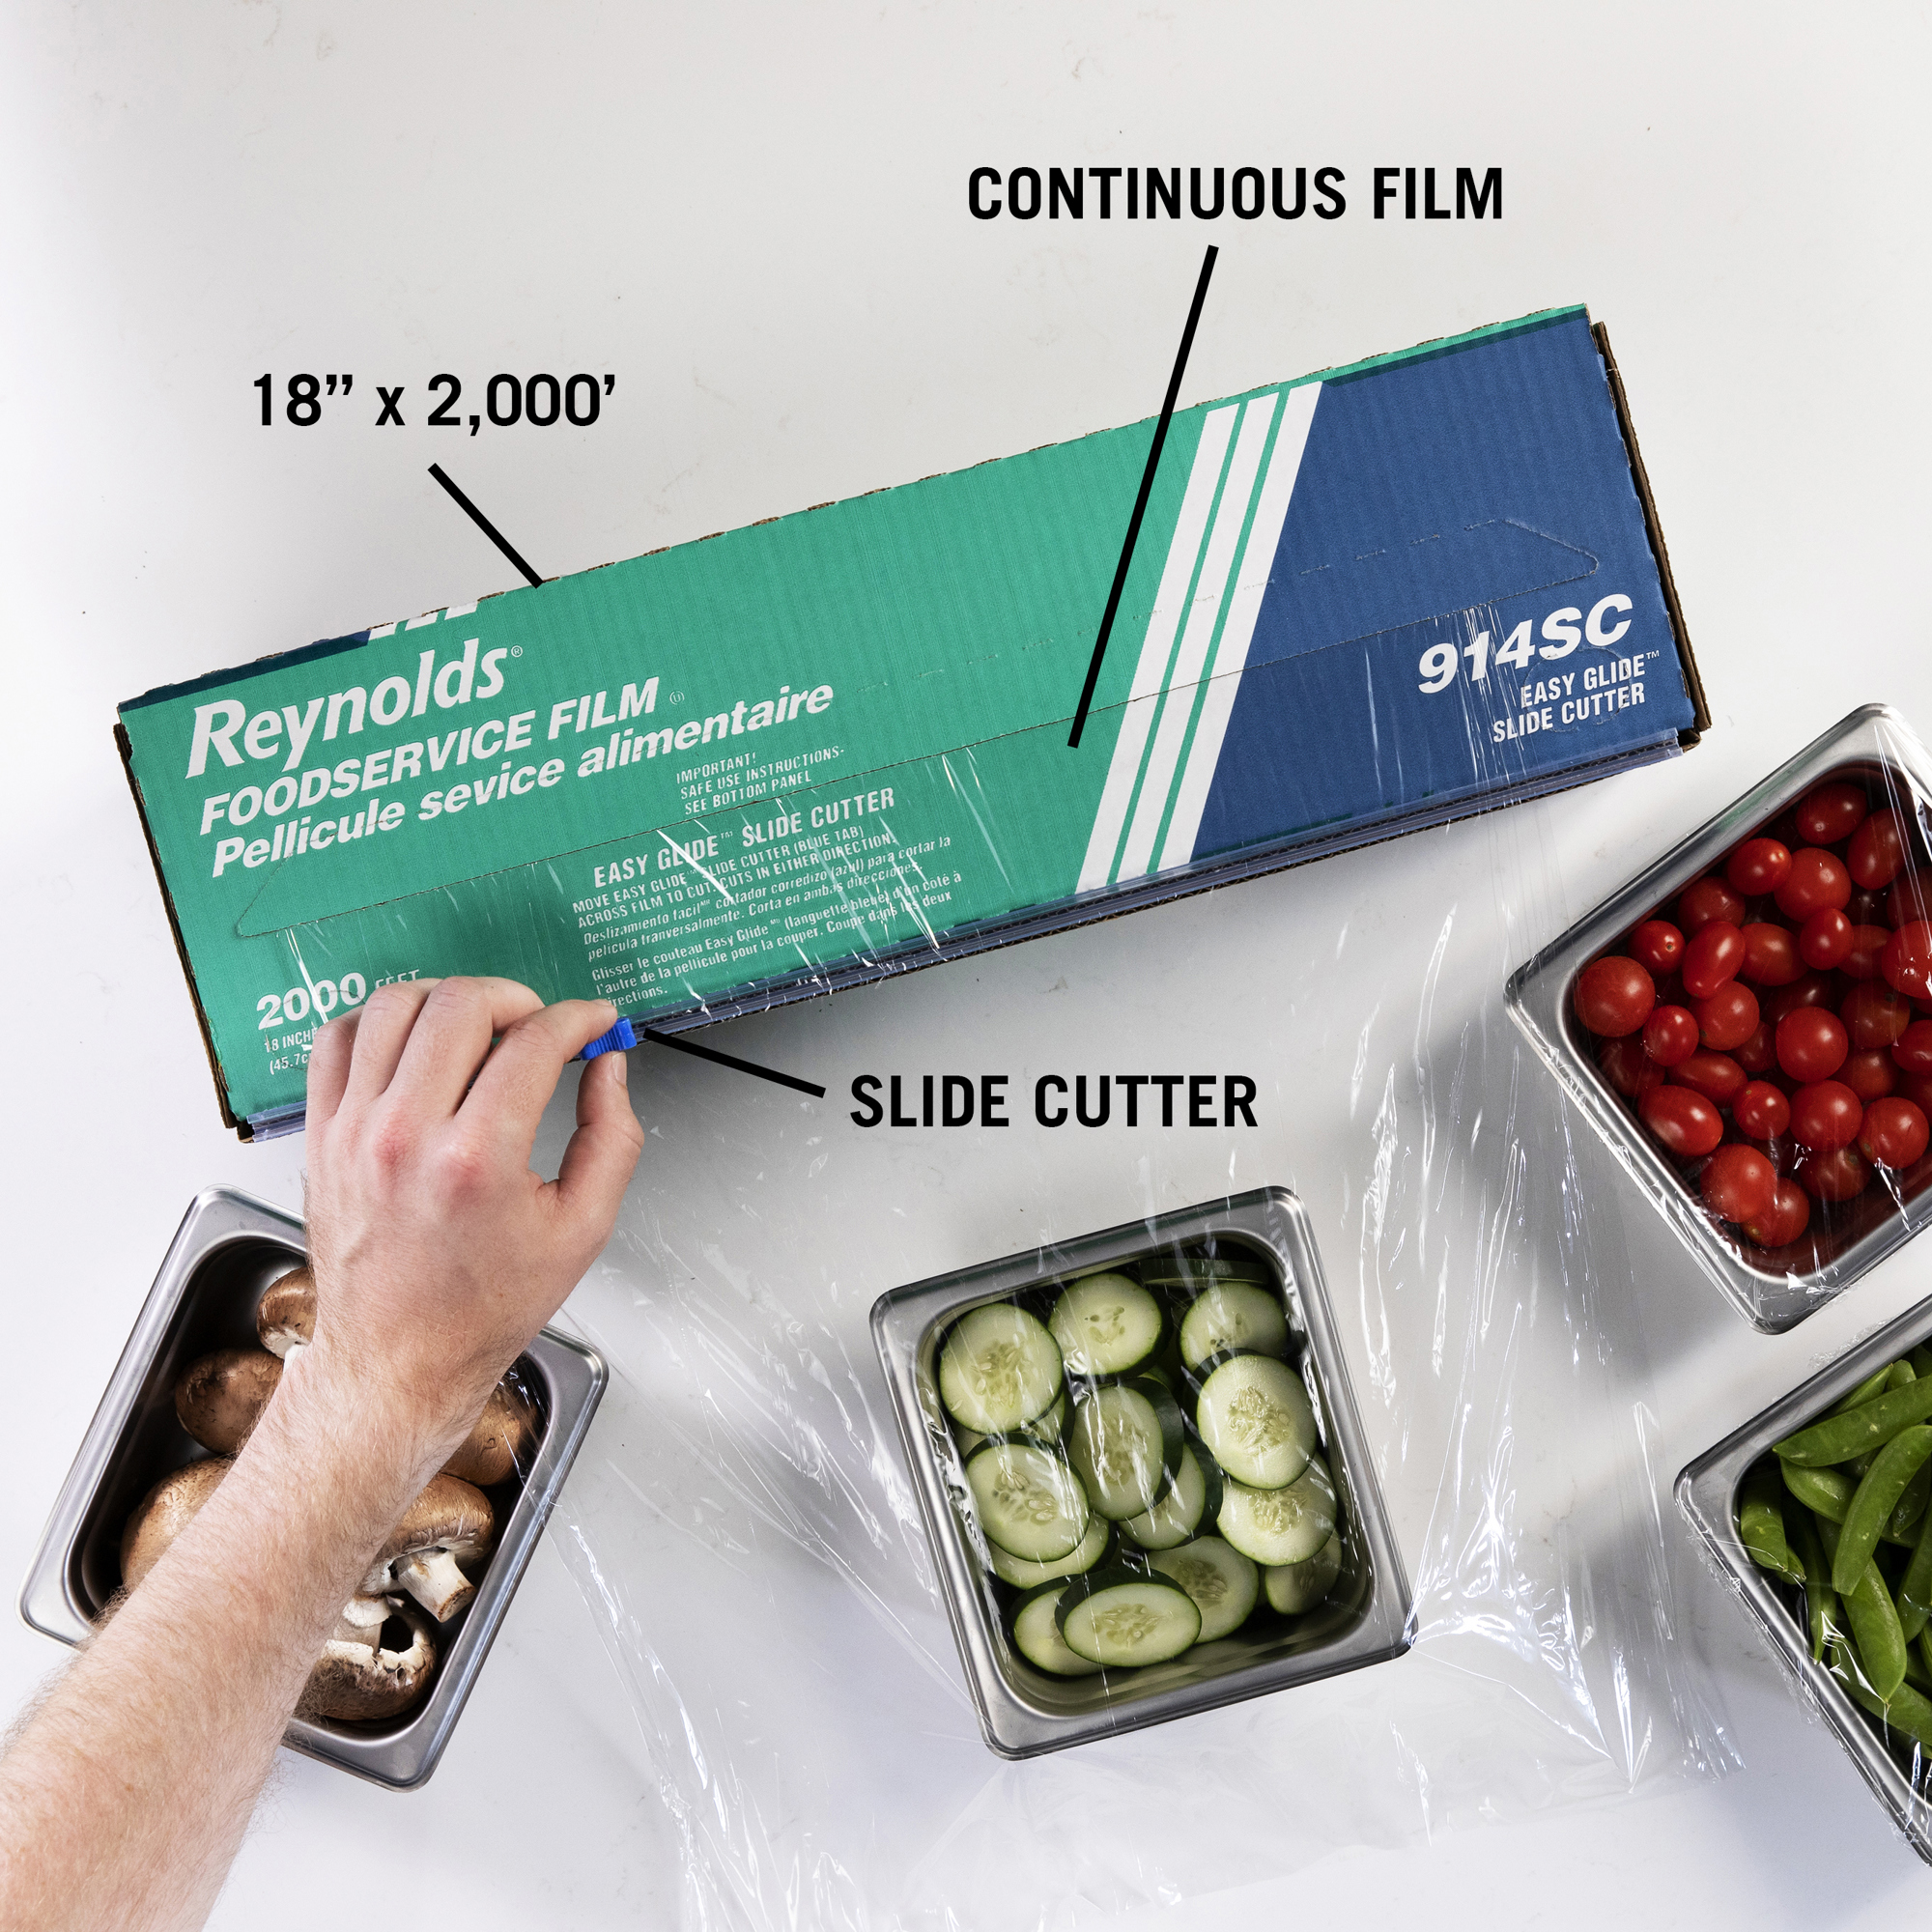 FoodService Film with Slide Cutter – Western Plastics